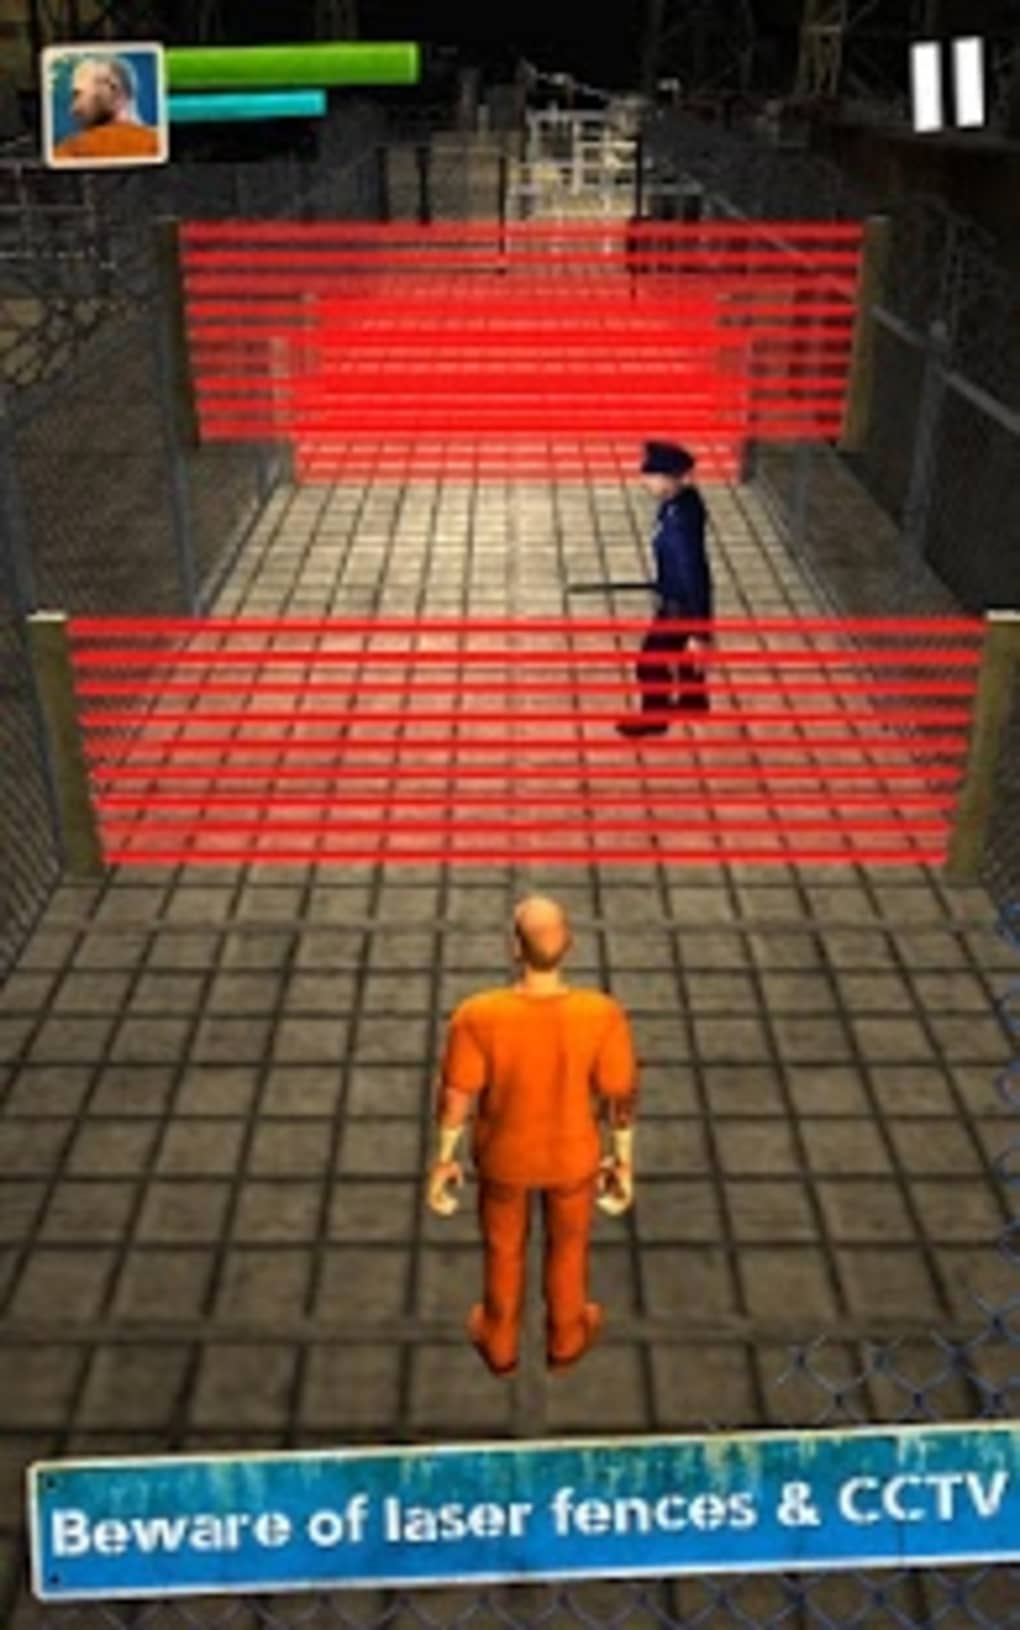 Escape game:prison adventure APK for Android Download